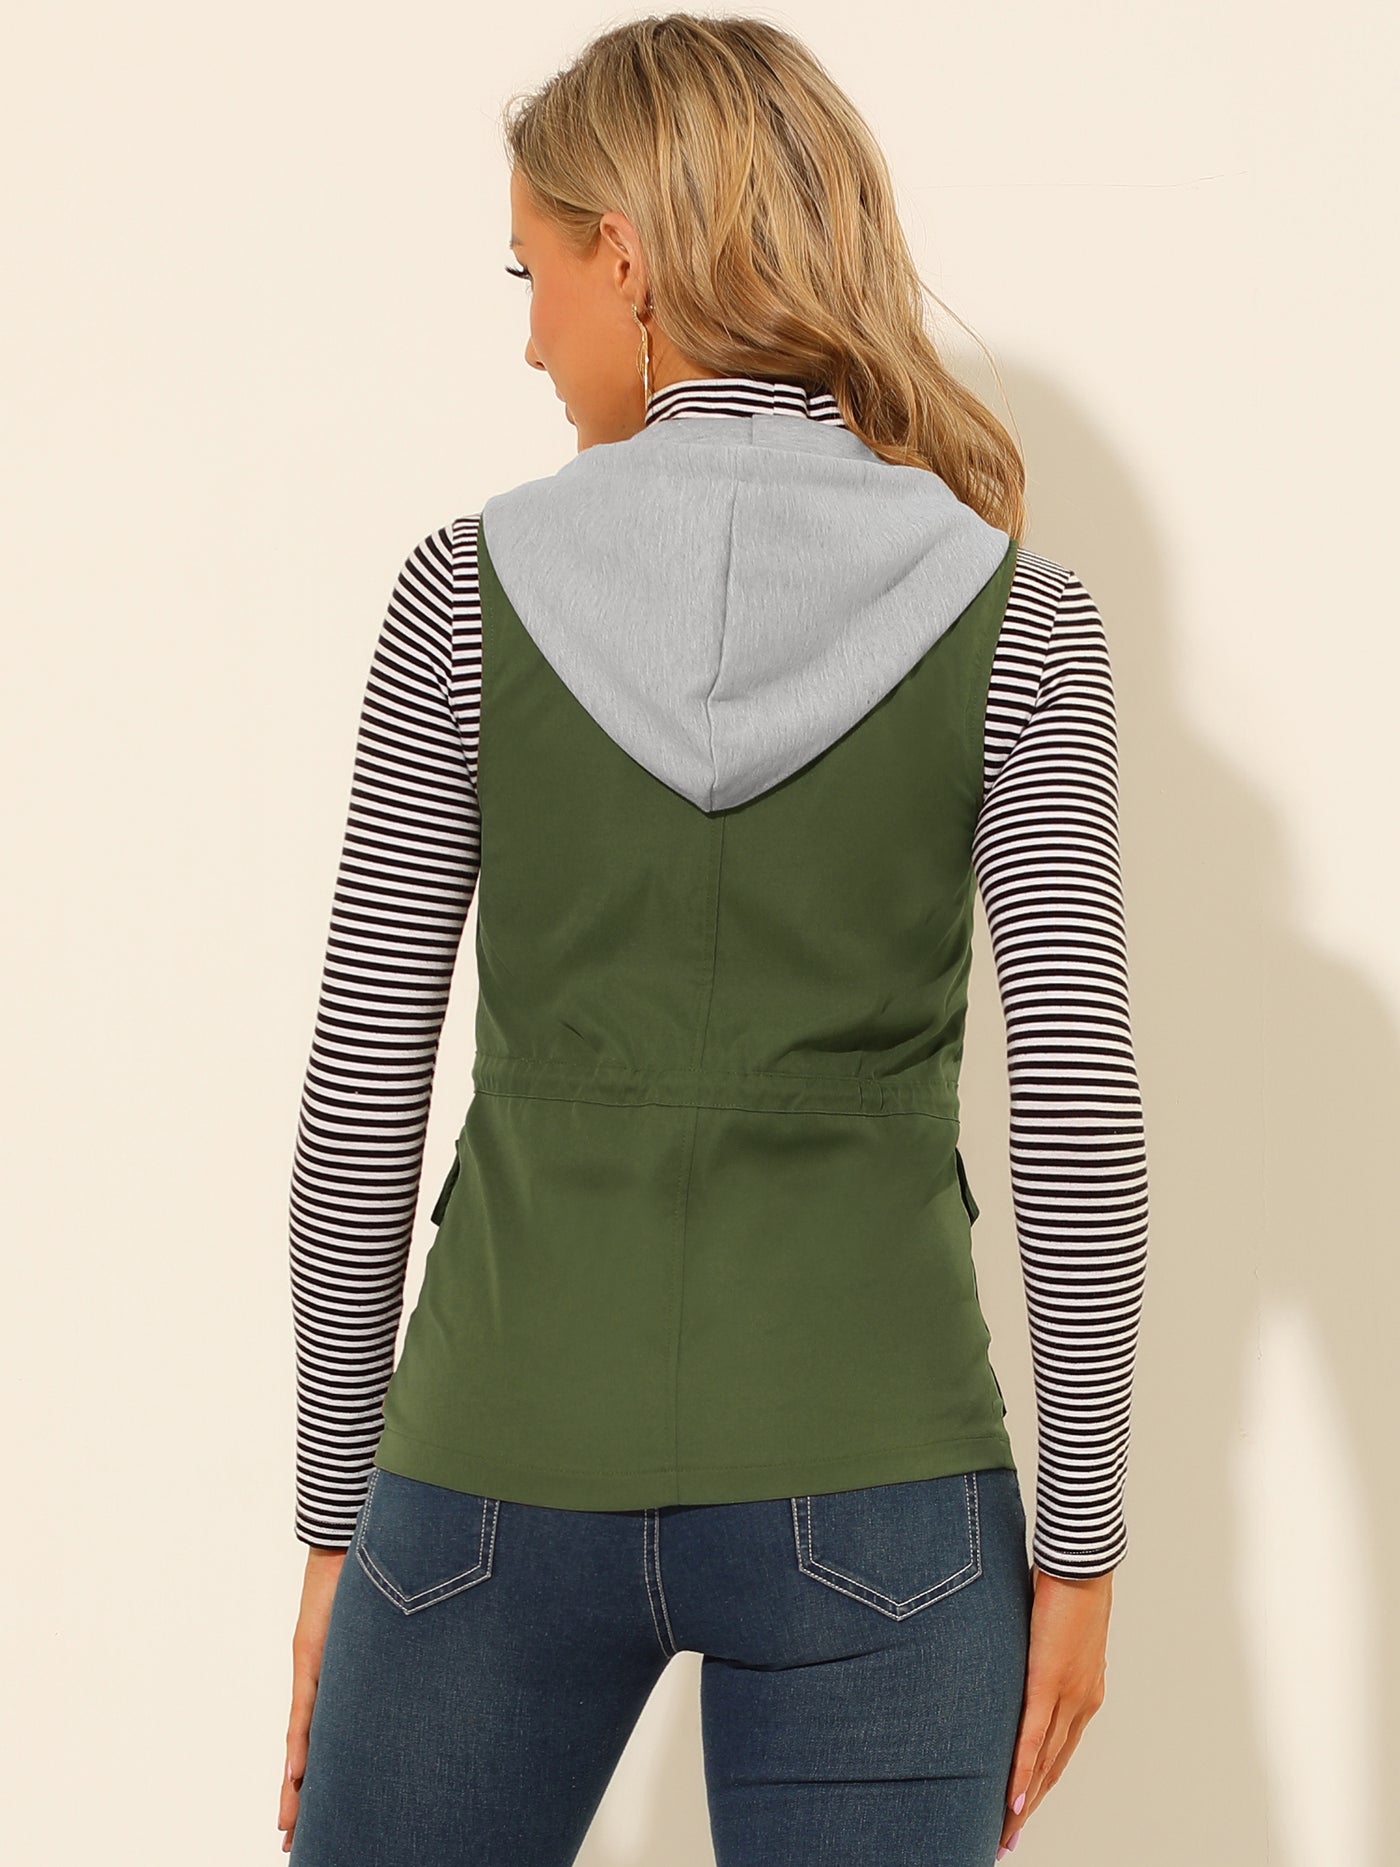 Allegra K Drawstring Sleeveless Lightweight Utility Hooded Zip Up Jacket Vest